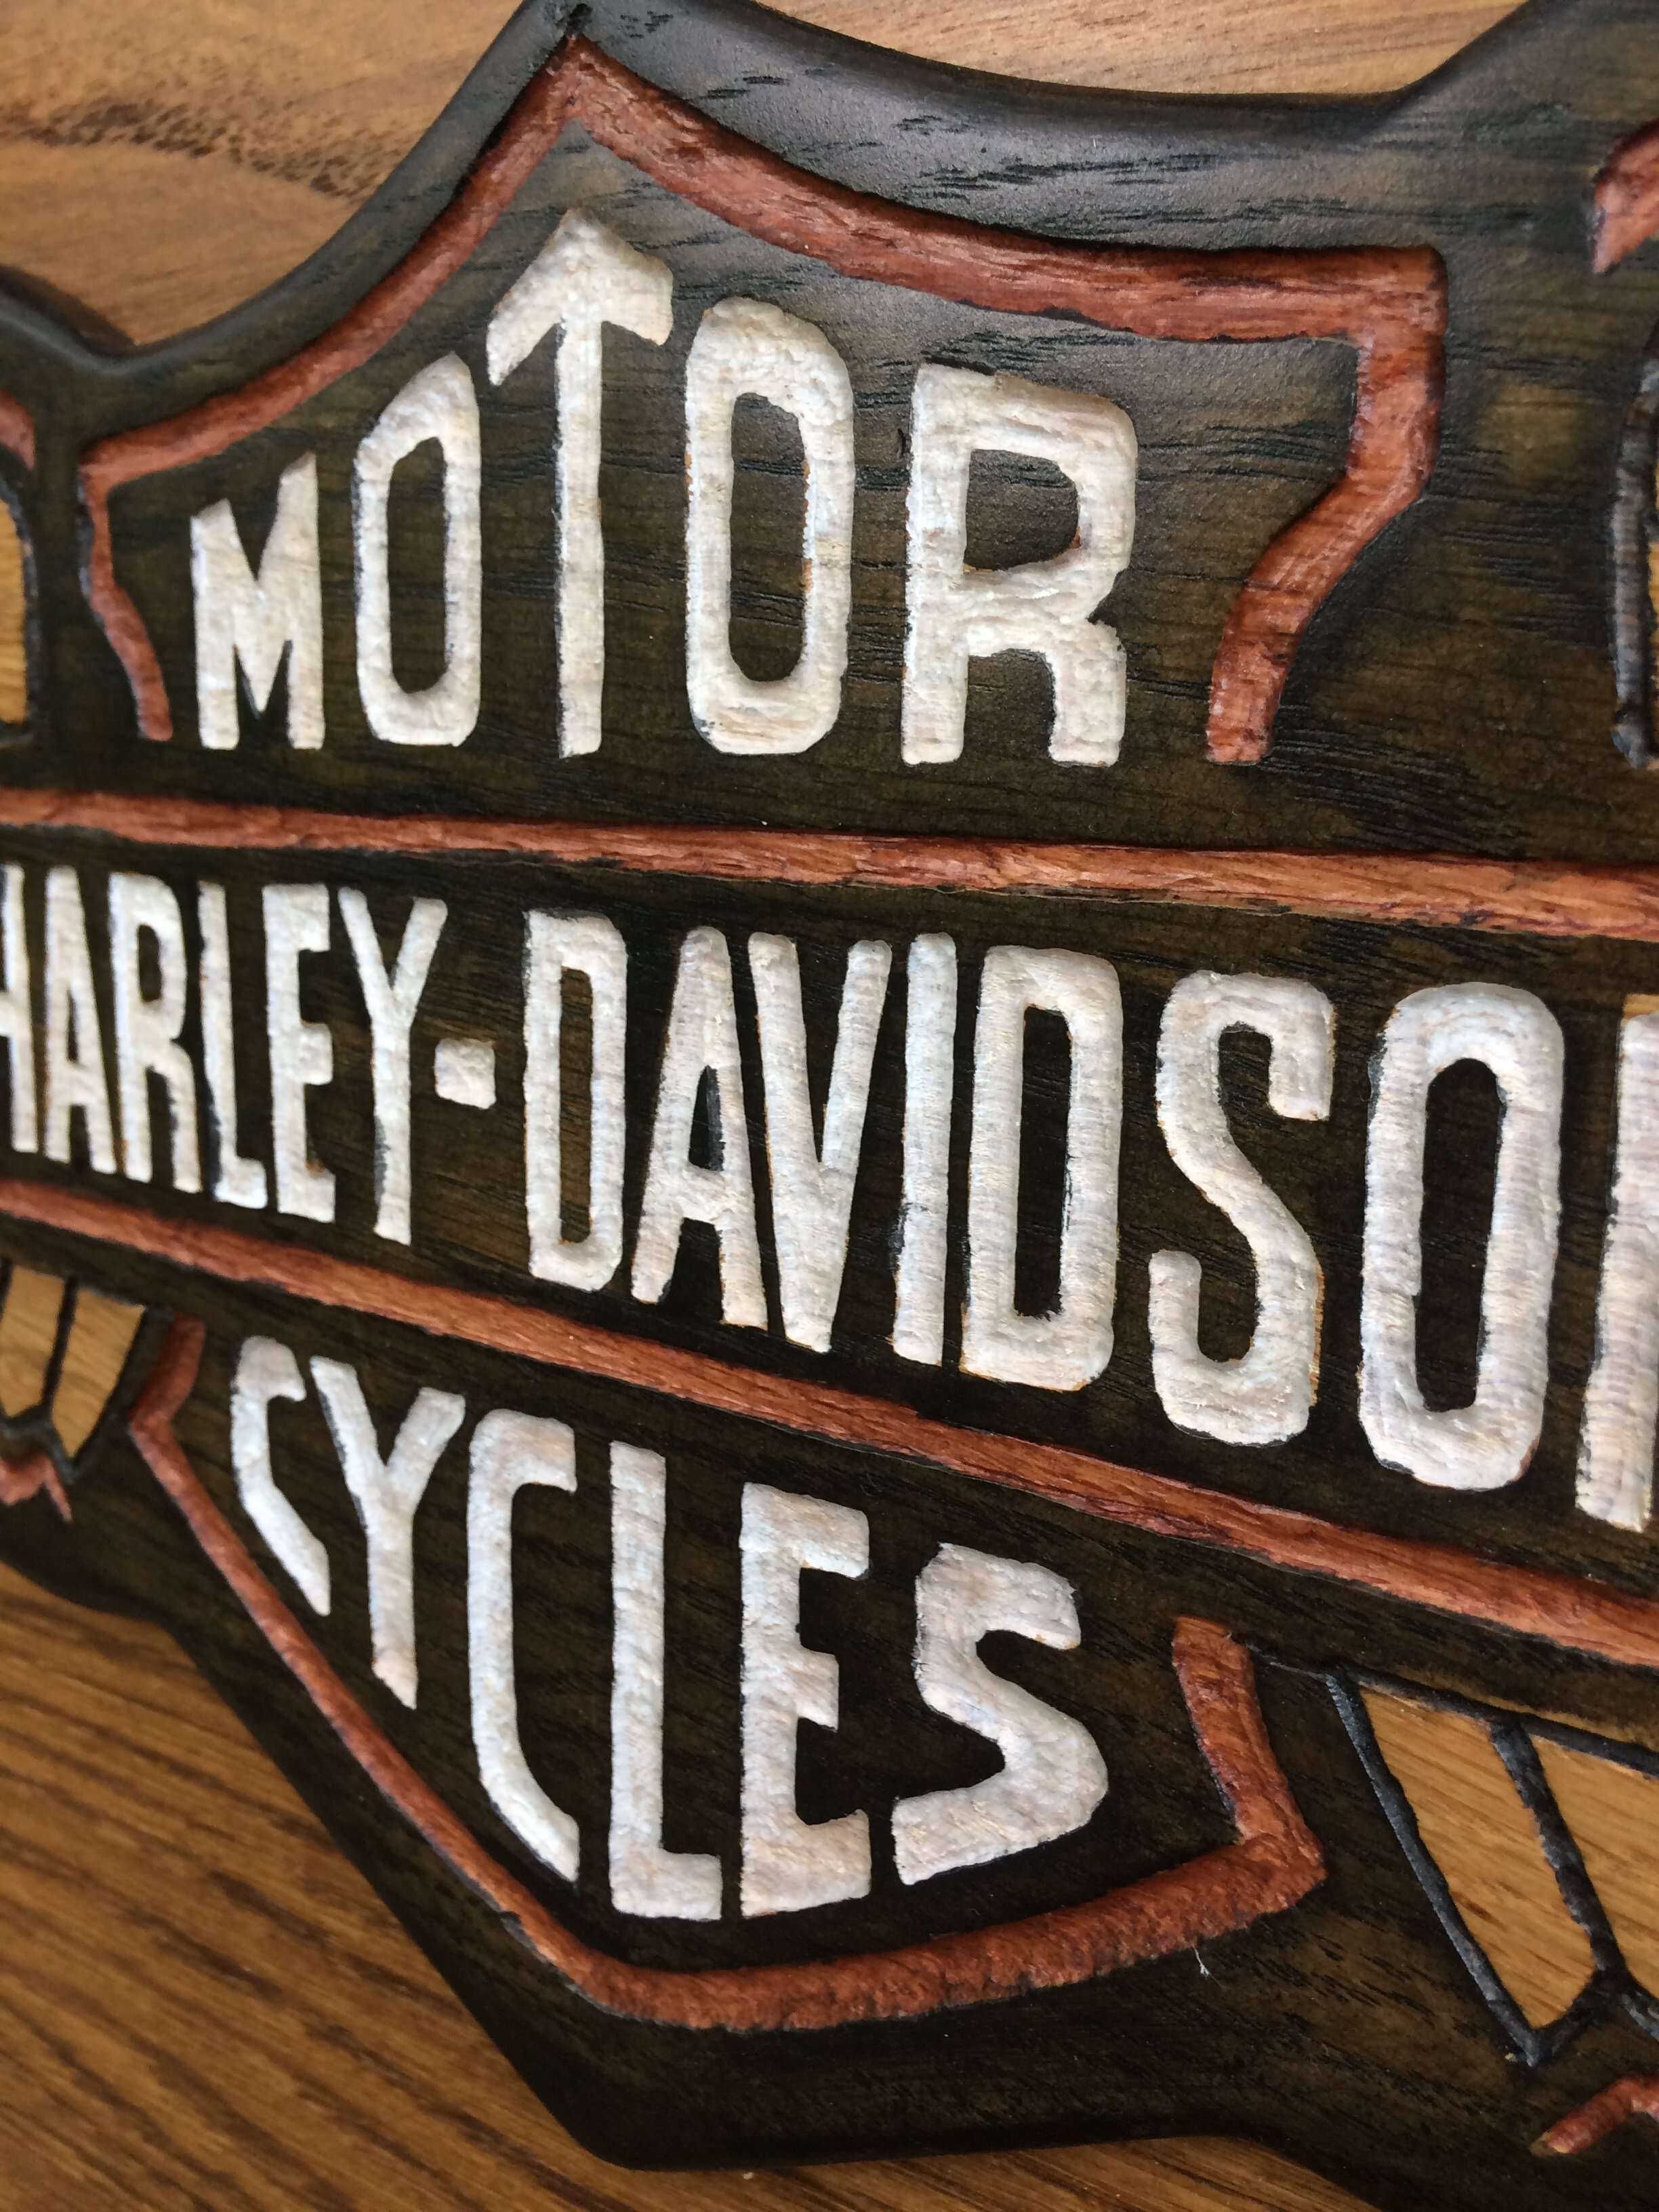 Harley Davidson Western Saloon Doors Front Carving.JPG